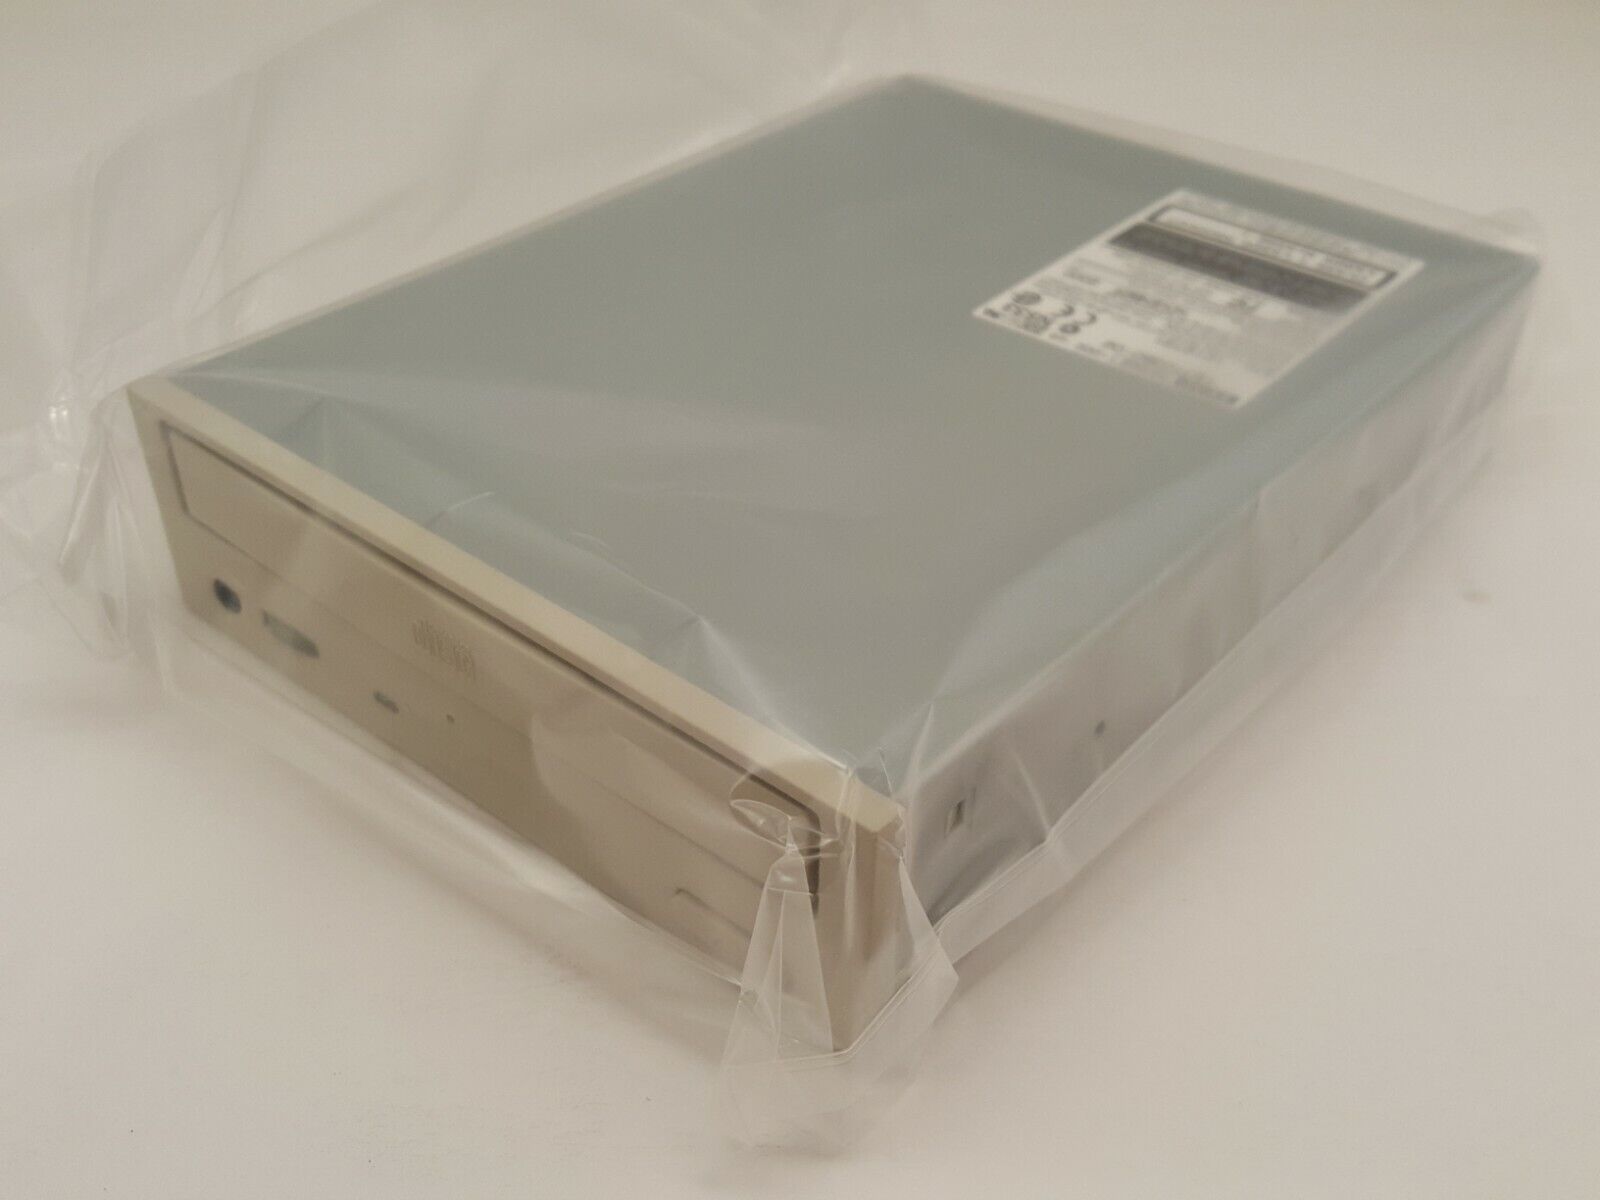 TEAC 32X CD-ROM Drive | 50 Pin SCSI Interface | Model CD532S | 19770350-02 | NEW